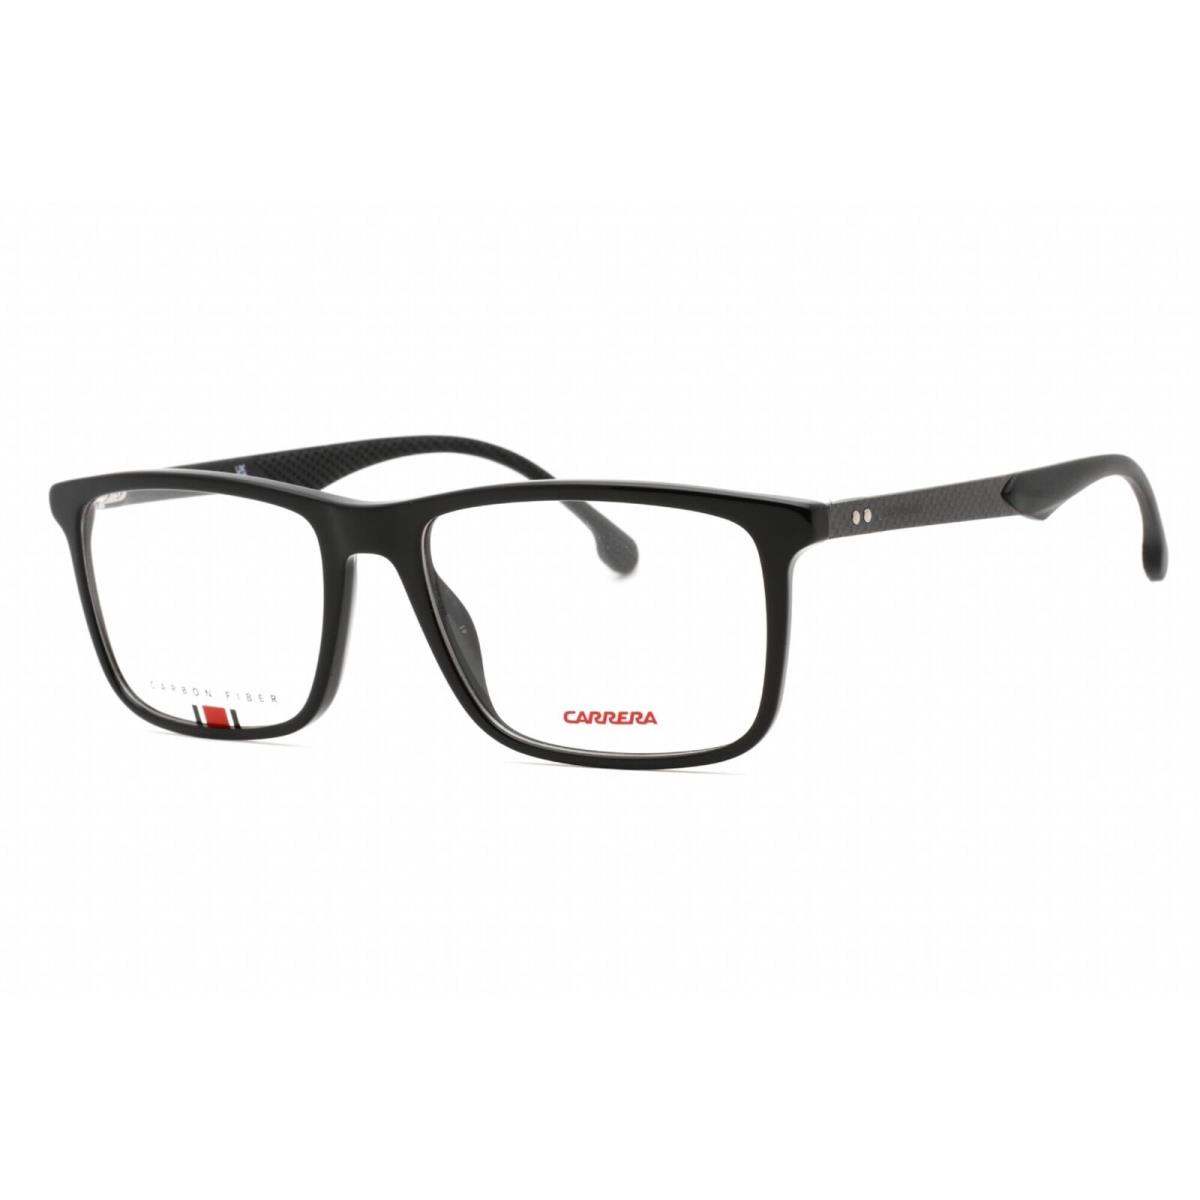 Carrera Men`s Eyeglasses Black Rectangular Full Rim Frame Carrera 8839 0807 00